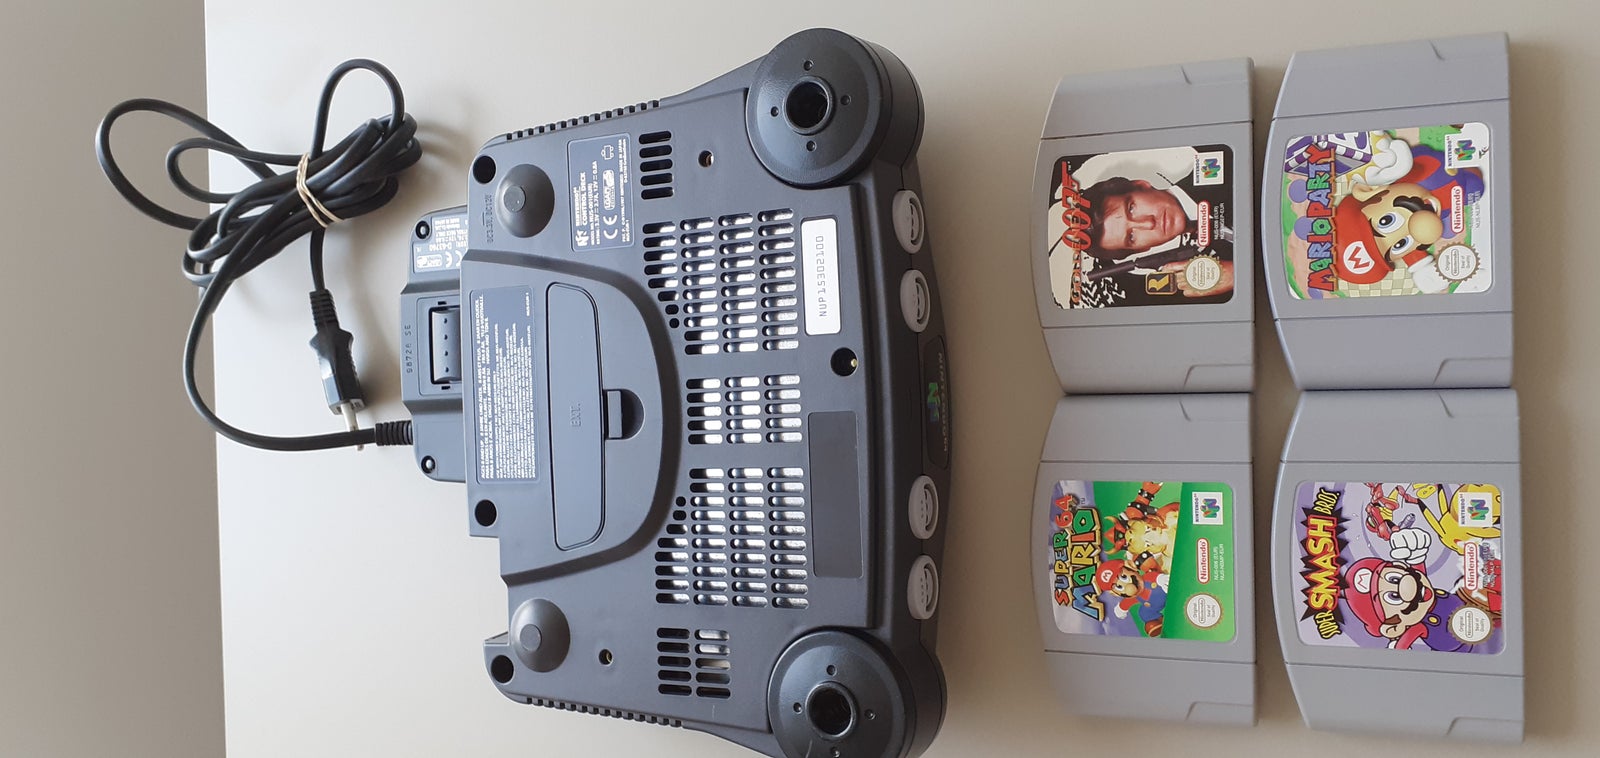 Nintendo 64, N64 med 4 spil, Perfekt